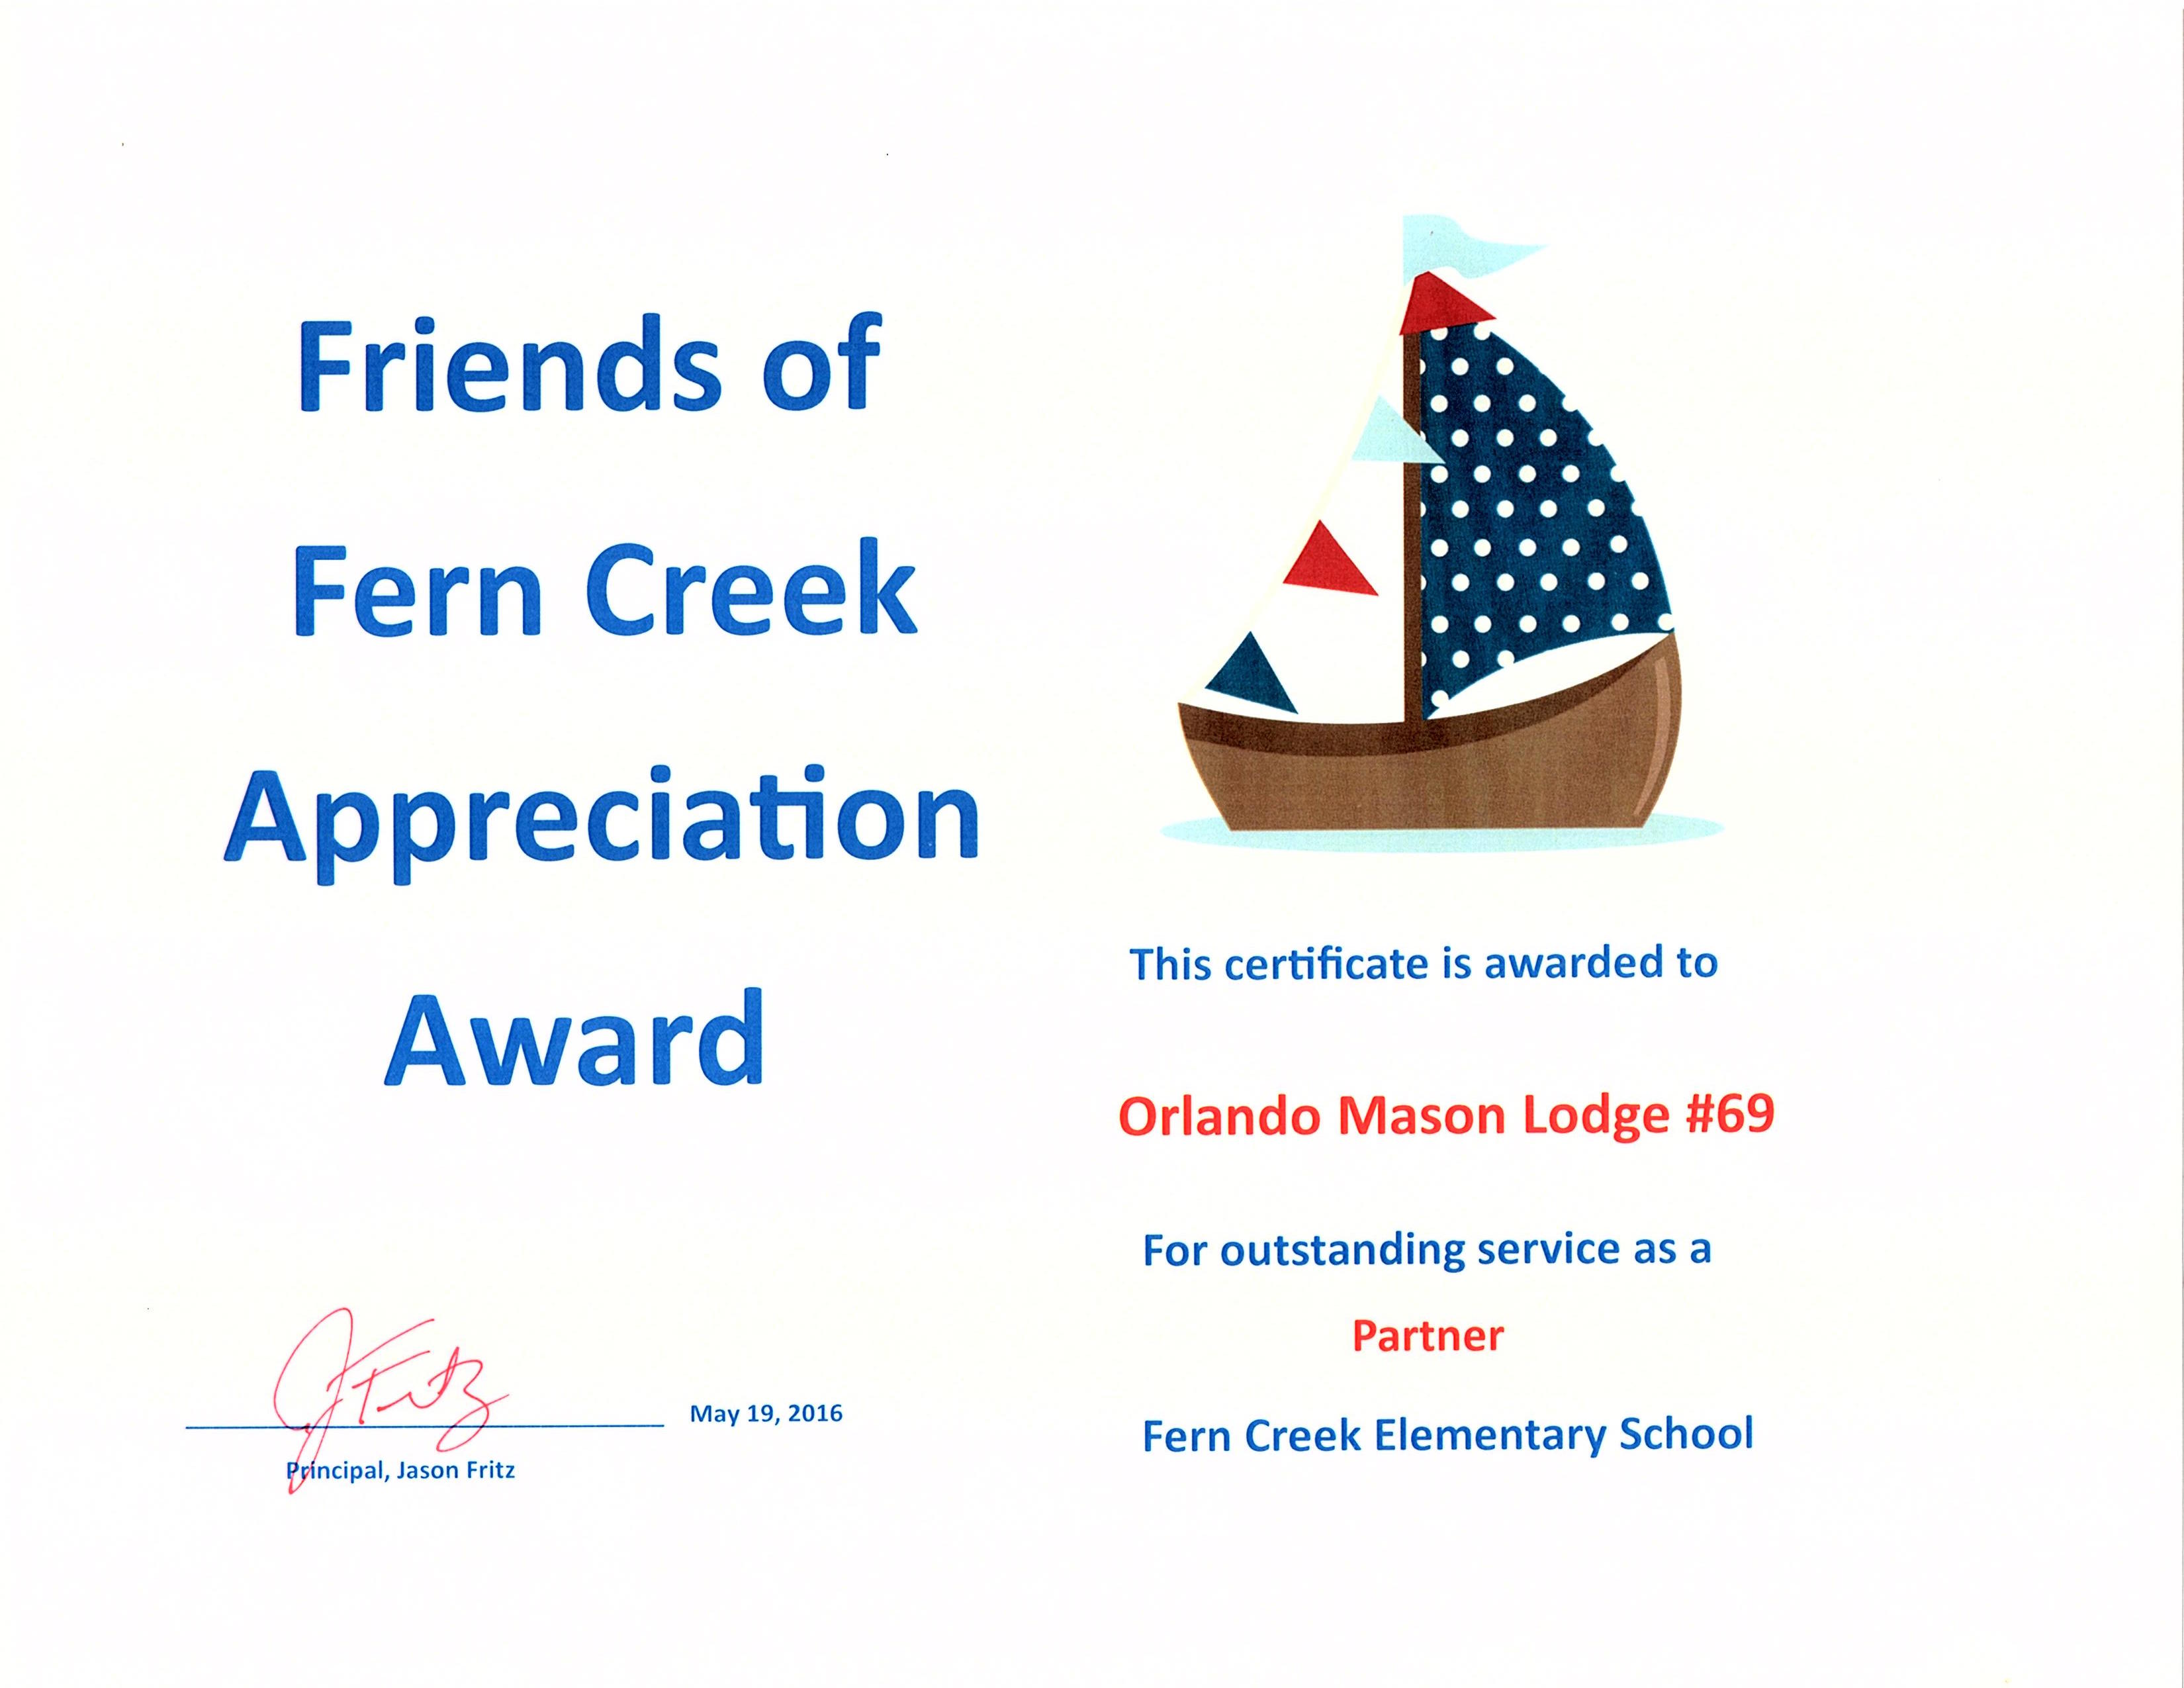 Friends of Fern Creek Appreciation Award